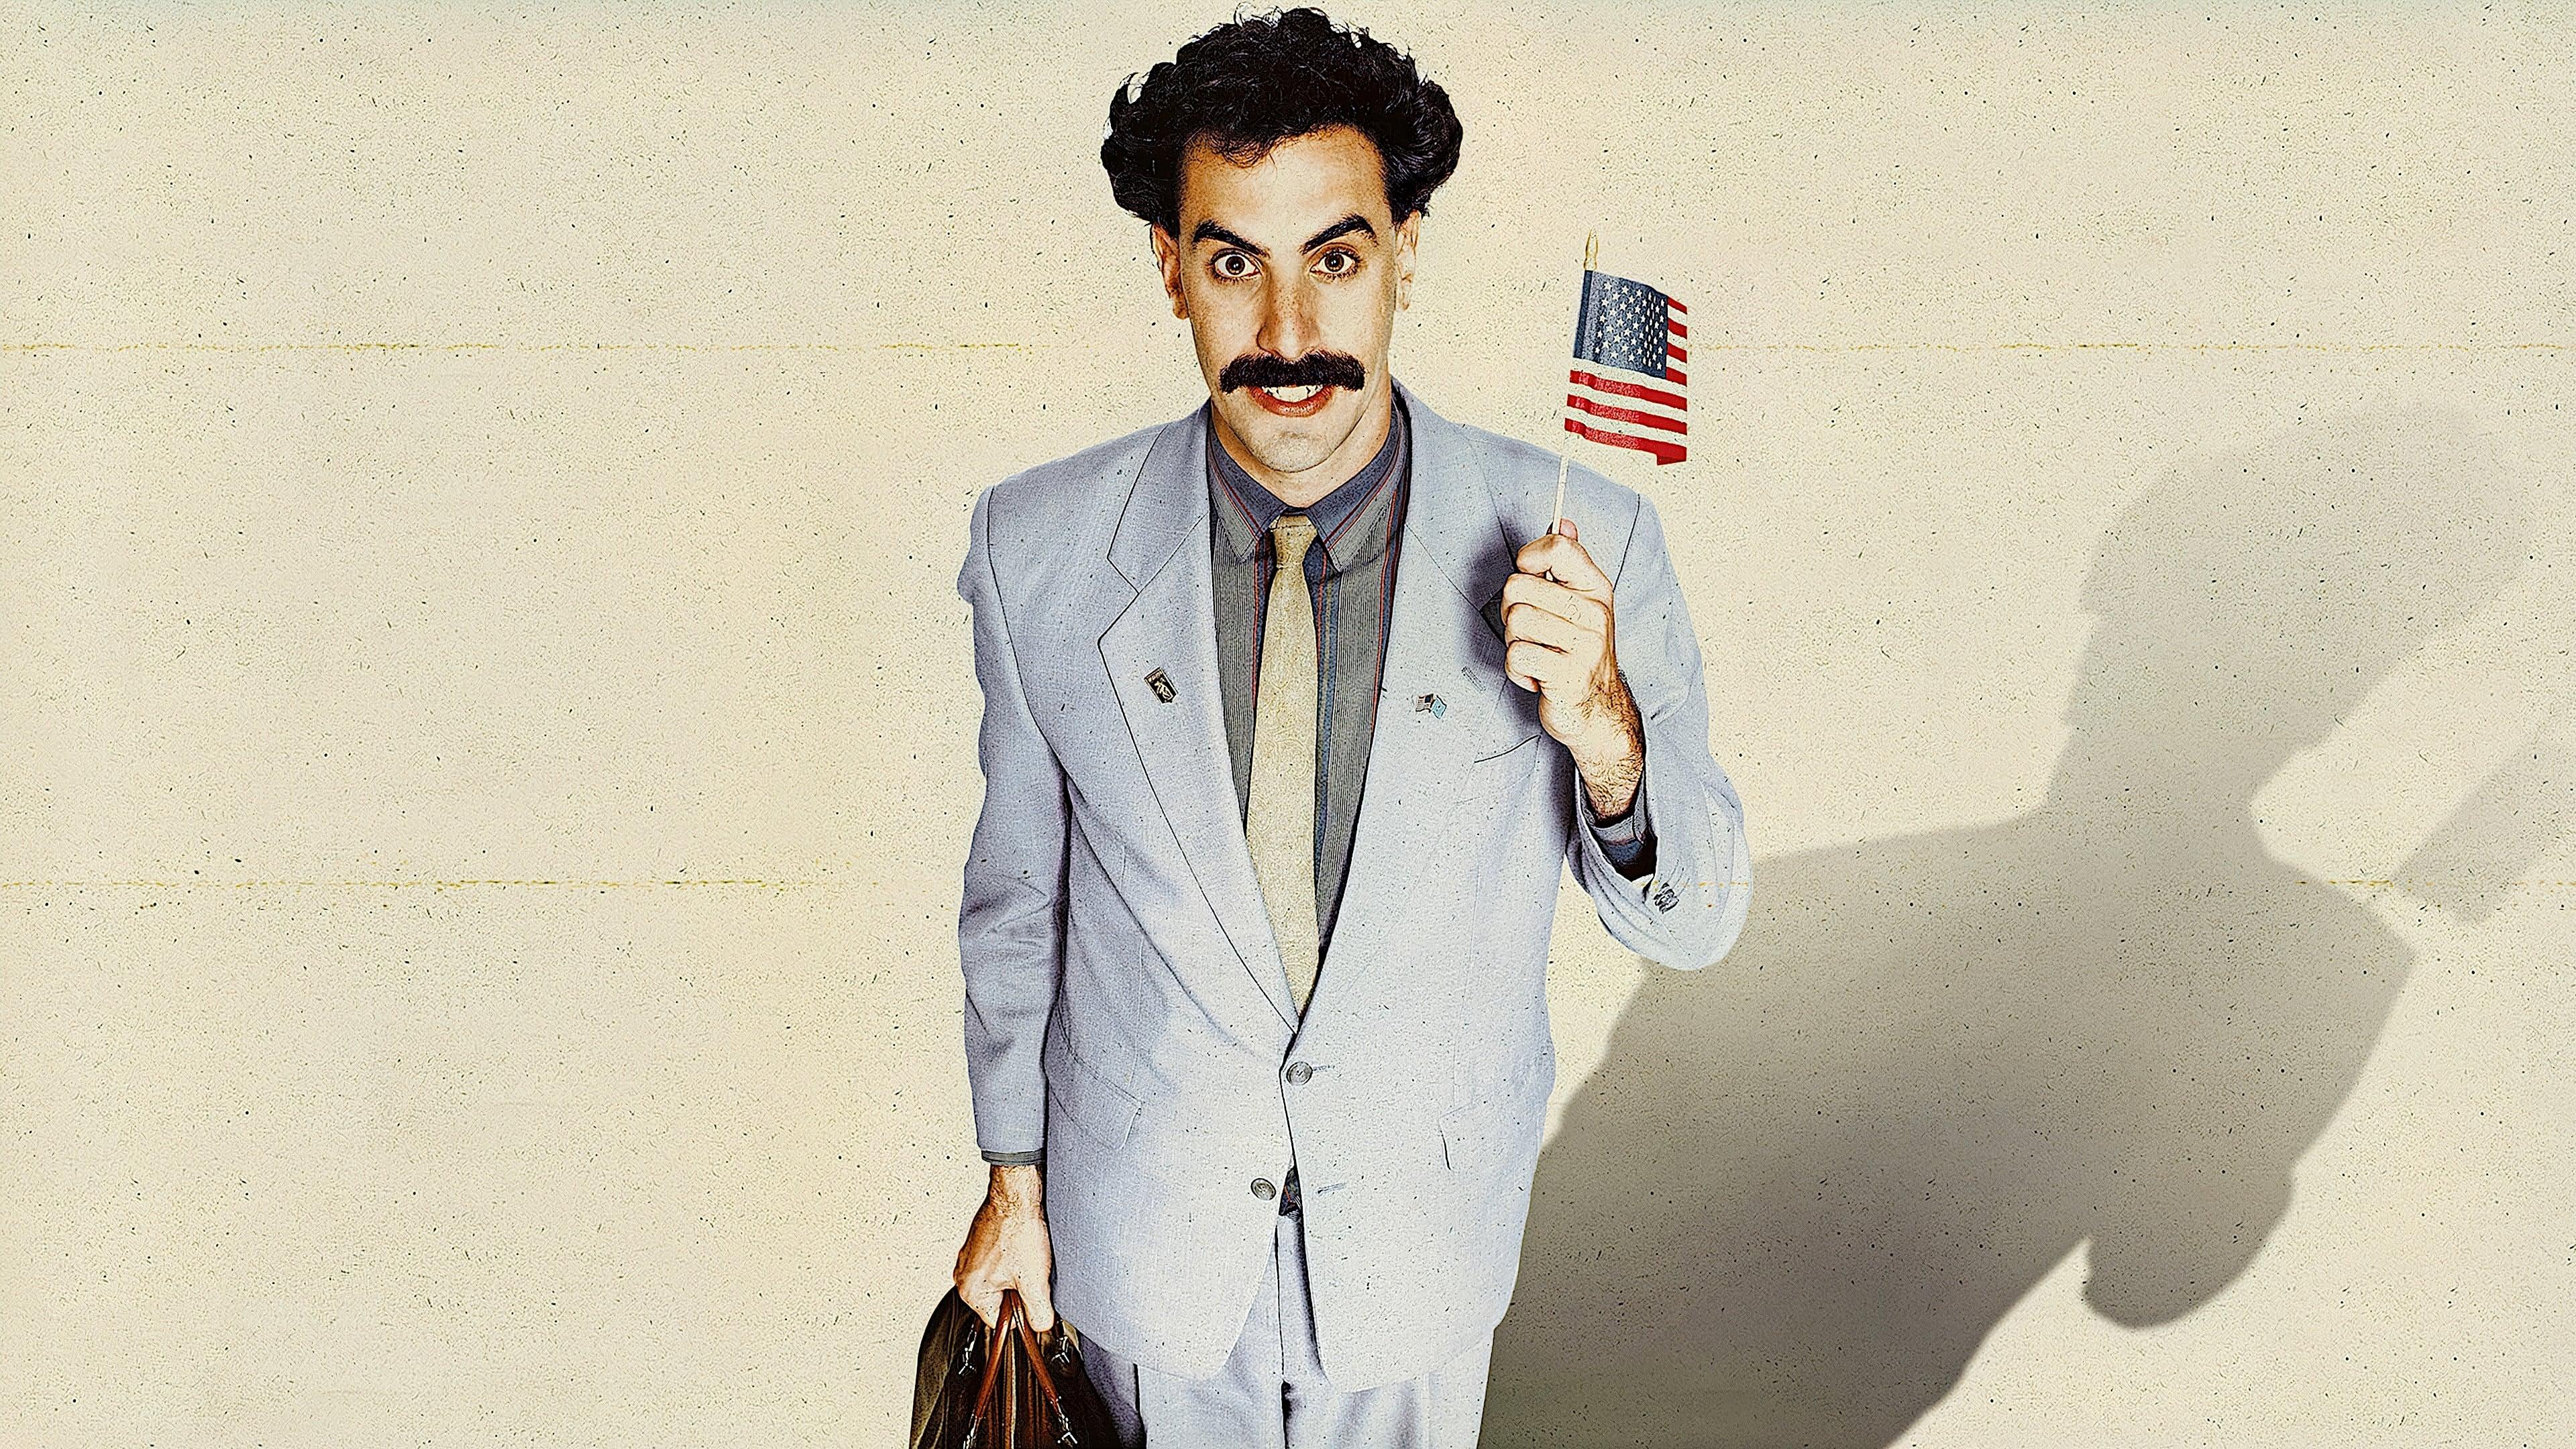 Borat: Cultural Learnings of America for Make Benefit Glorious Nation of Kazakhstan backdrop